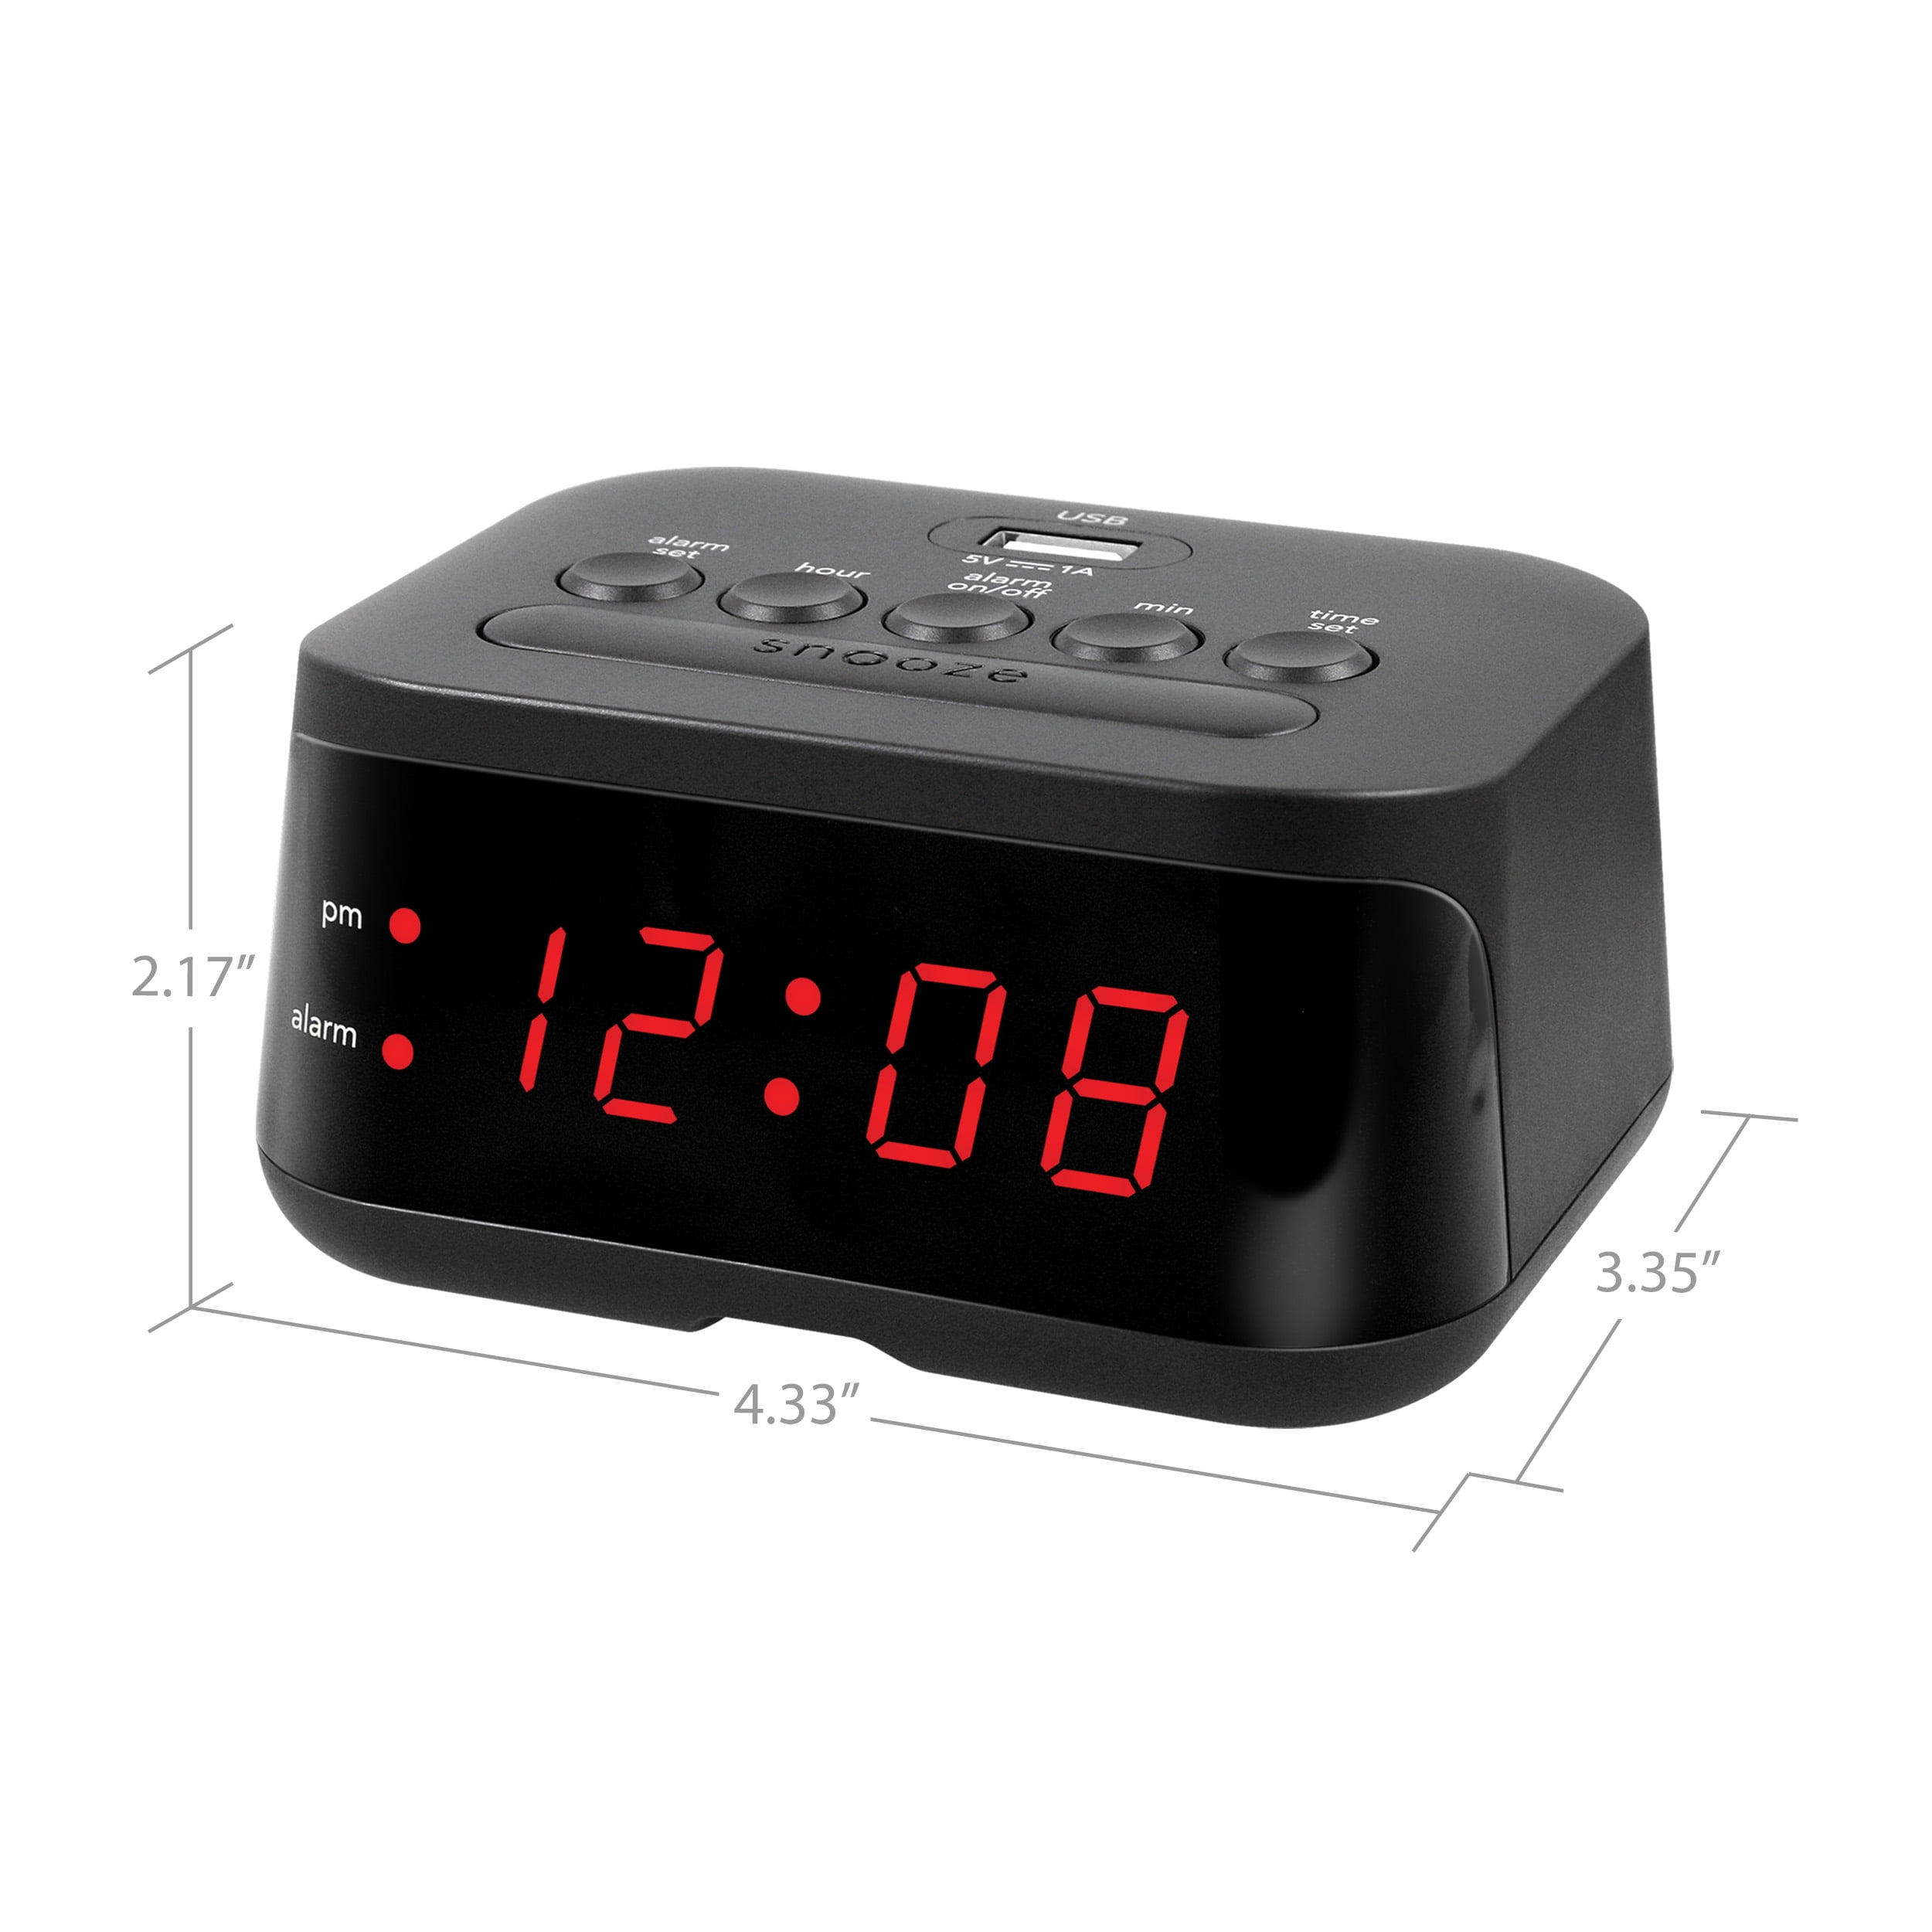 Precision Digital RadioControlled Alarm Clock USB Port for Mobile Charging AP055 